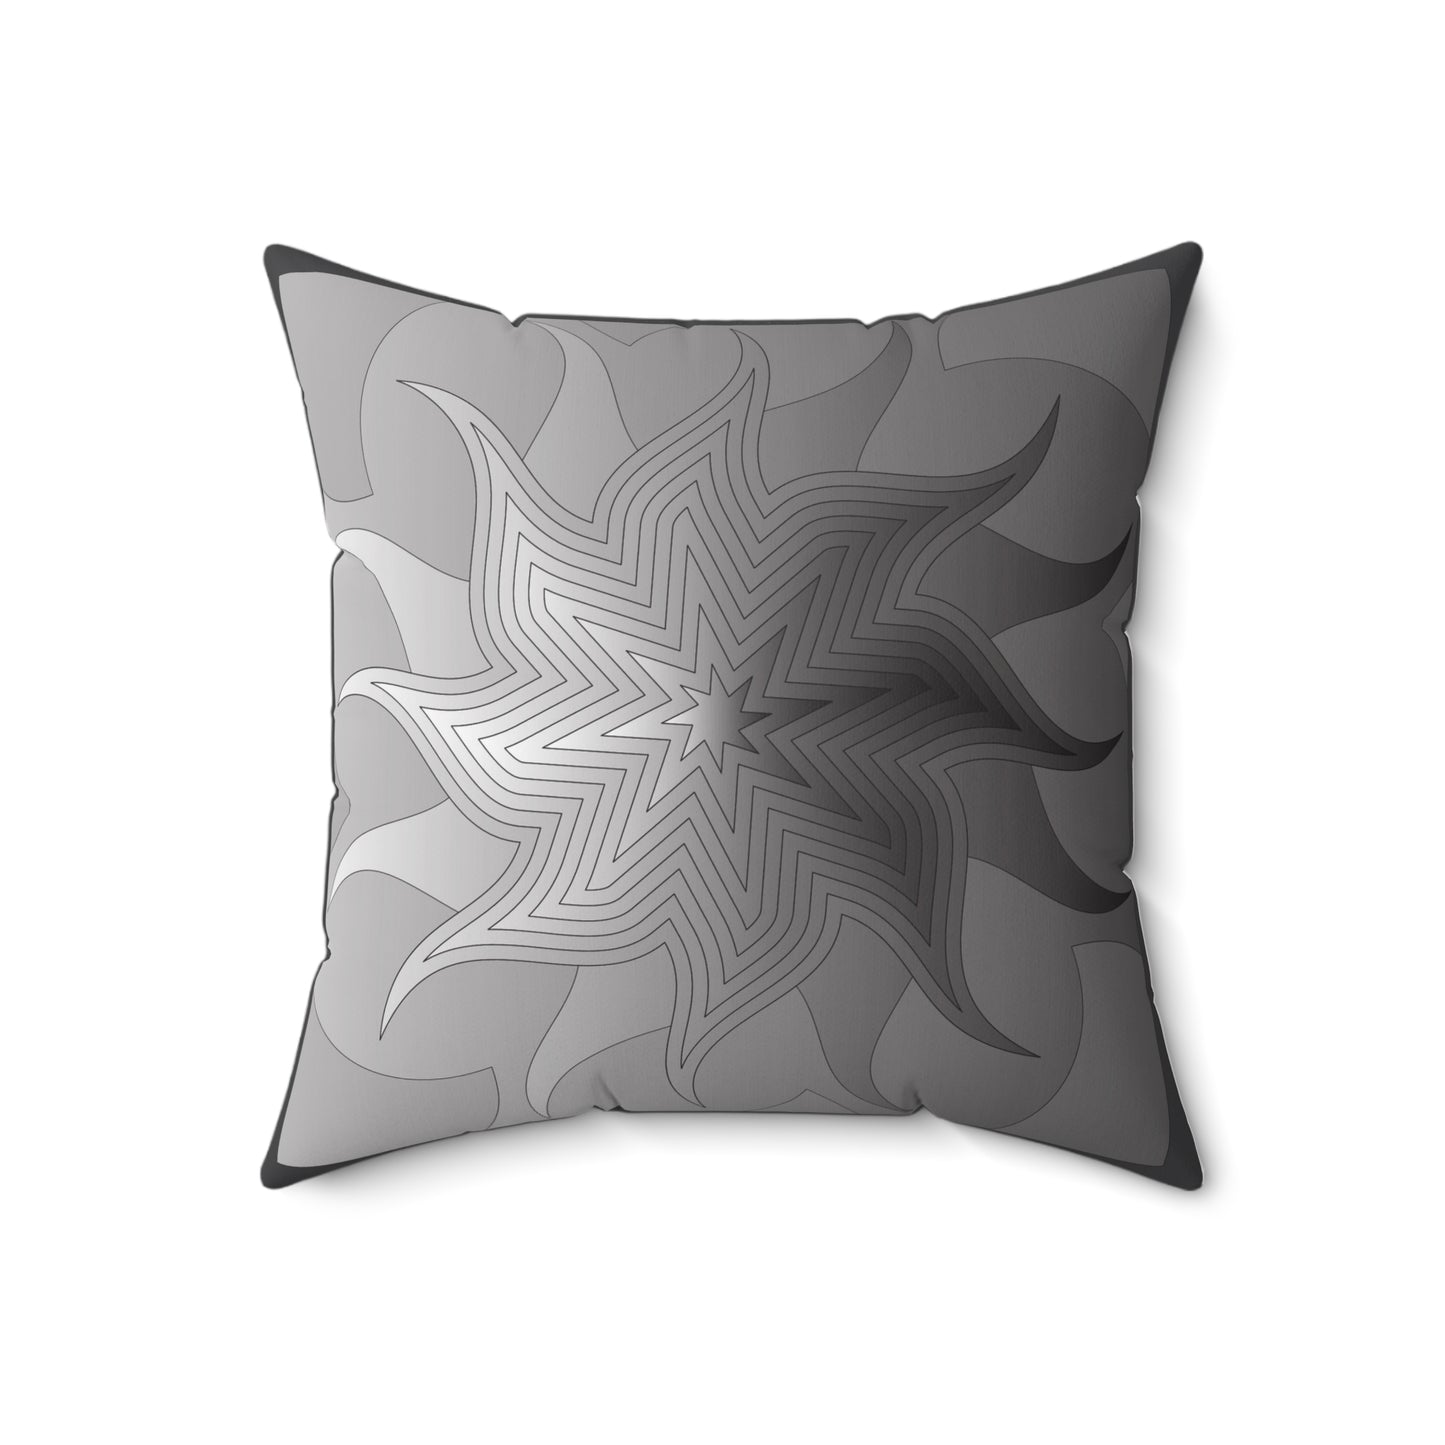 Spun Polyester Square Pillow  Kukloso Mandala No 109 Copper/Silver - Free Shipping